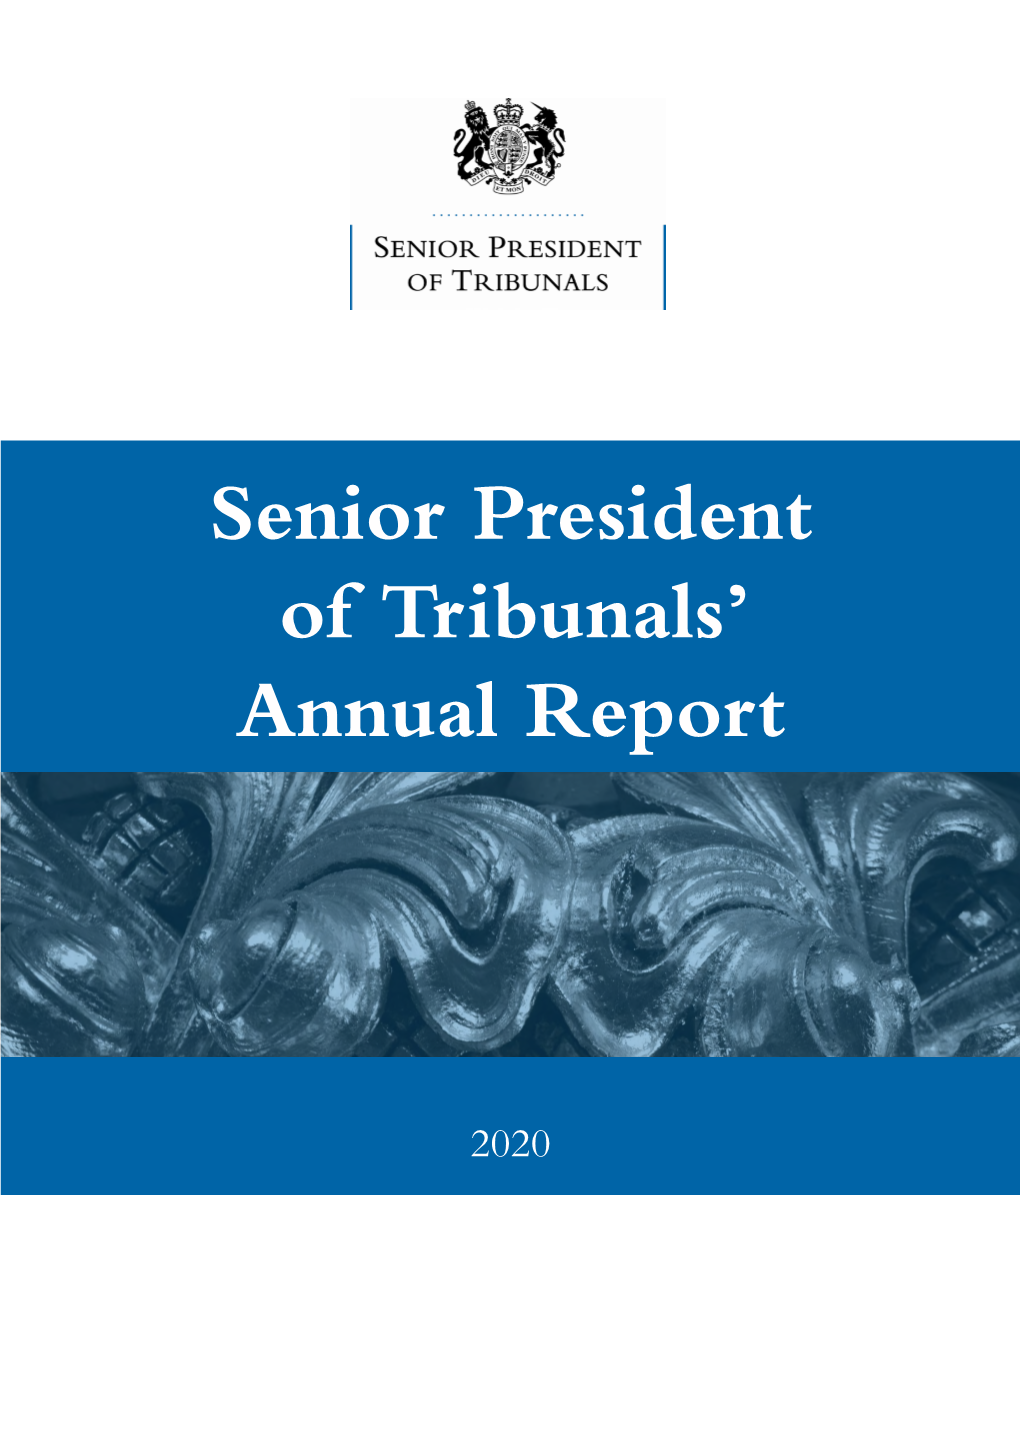 The Senior President of Tribunals Annual Report 2020